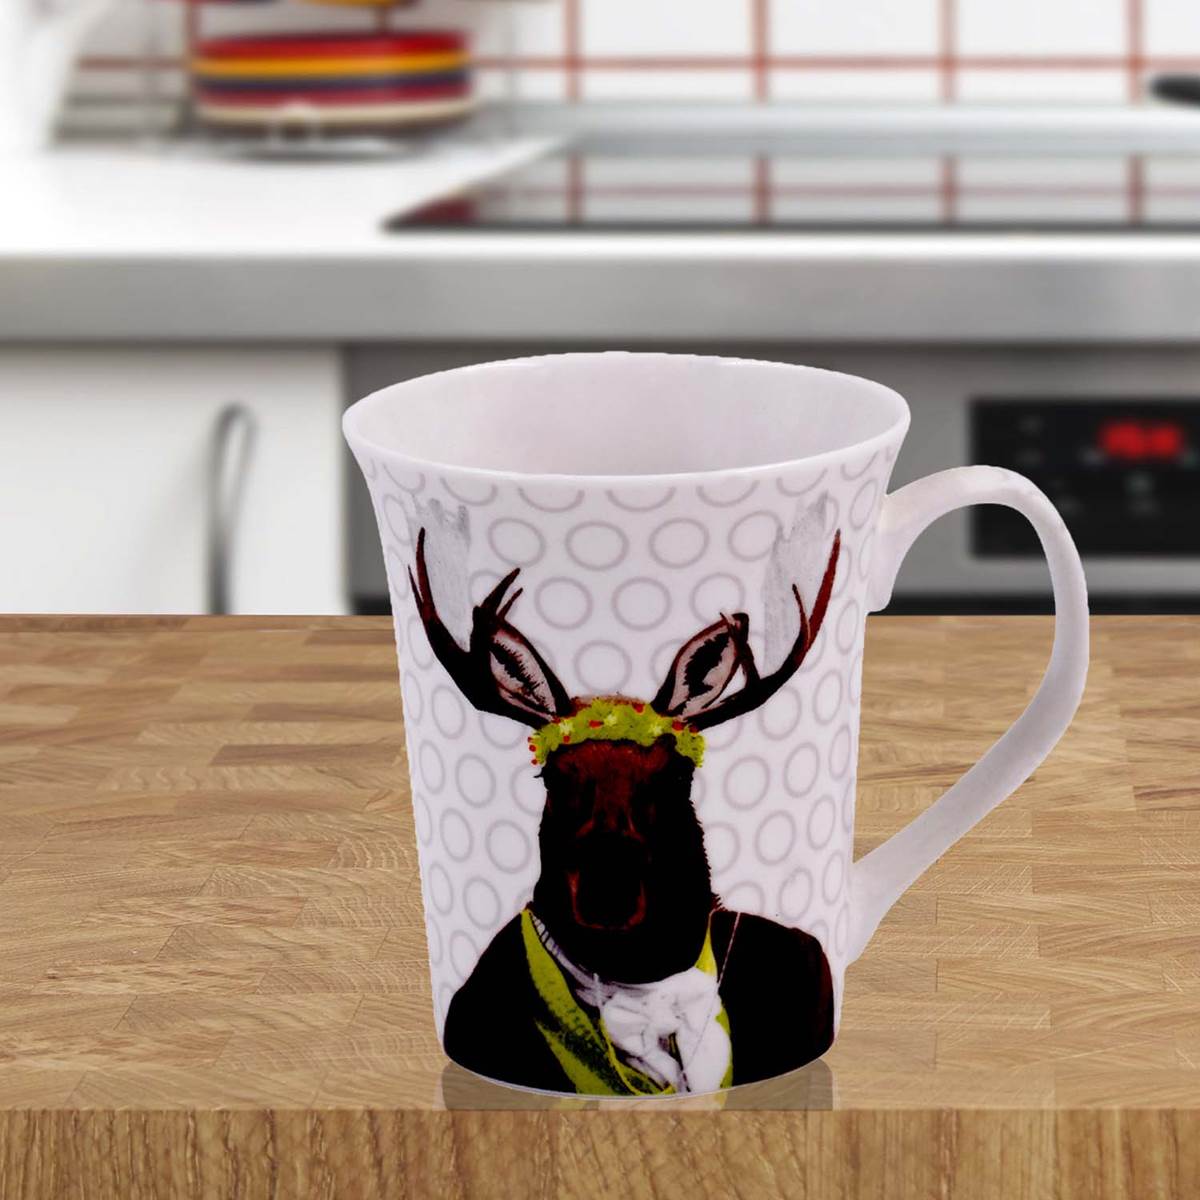 Printed Ceramic Tall Coffee or Tea Mug with handle - 325ml (4019C-A)